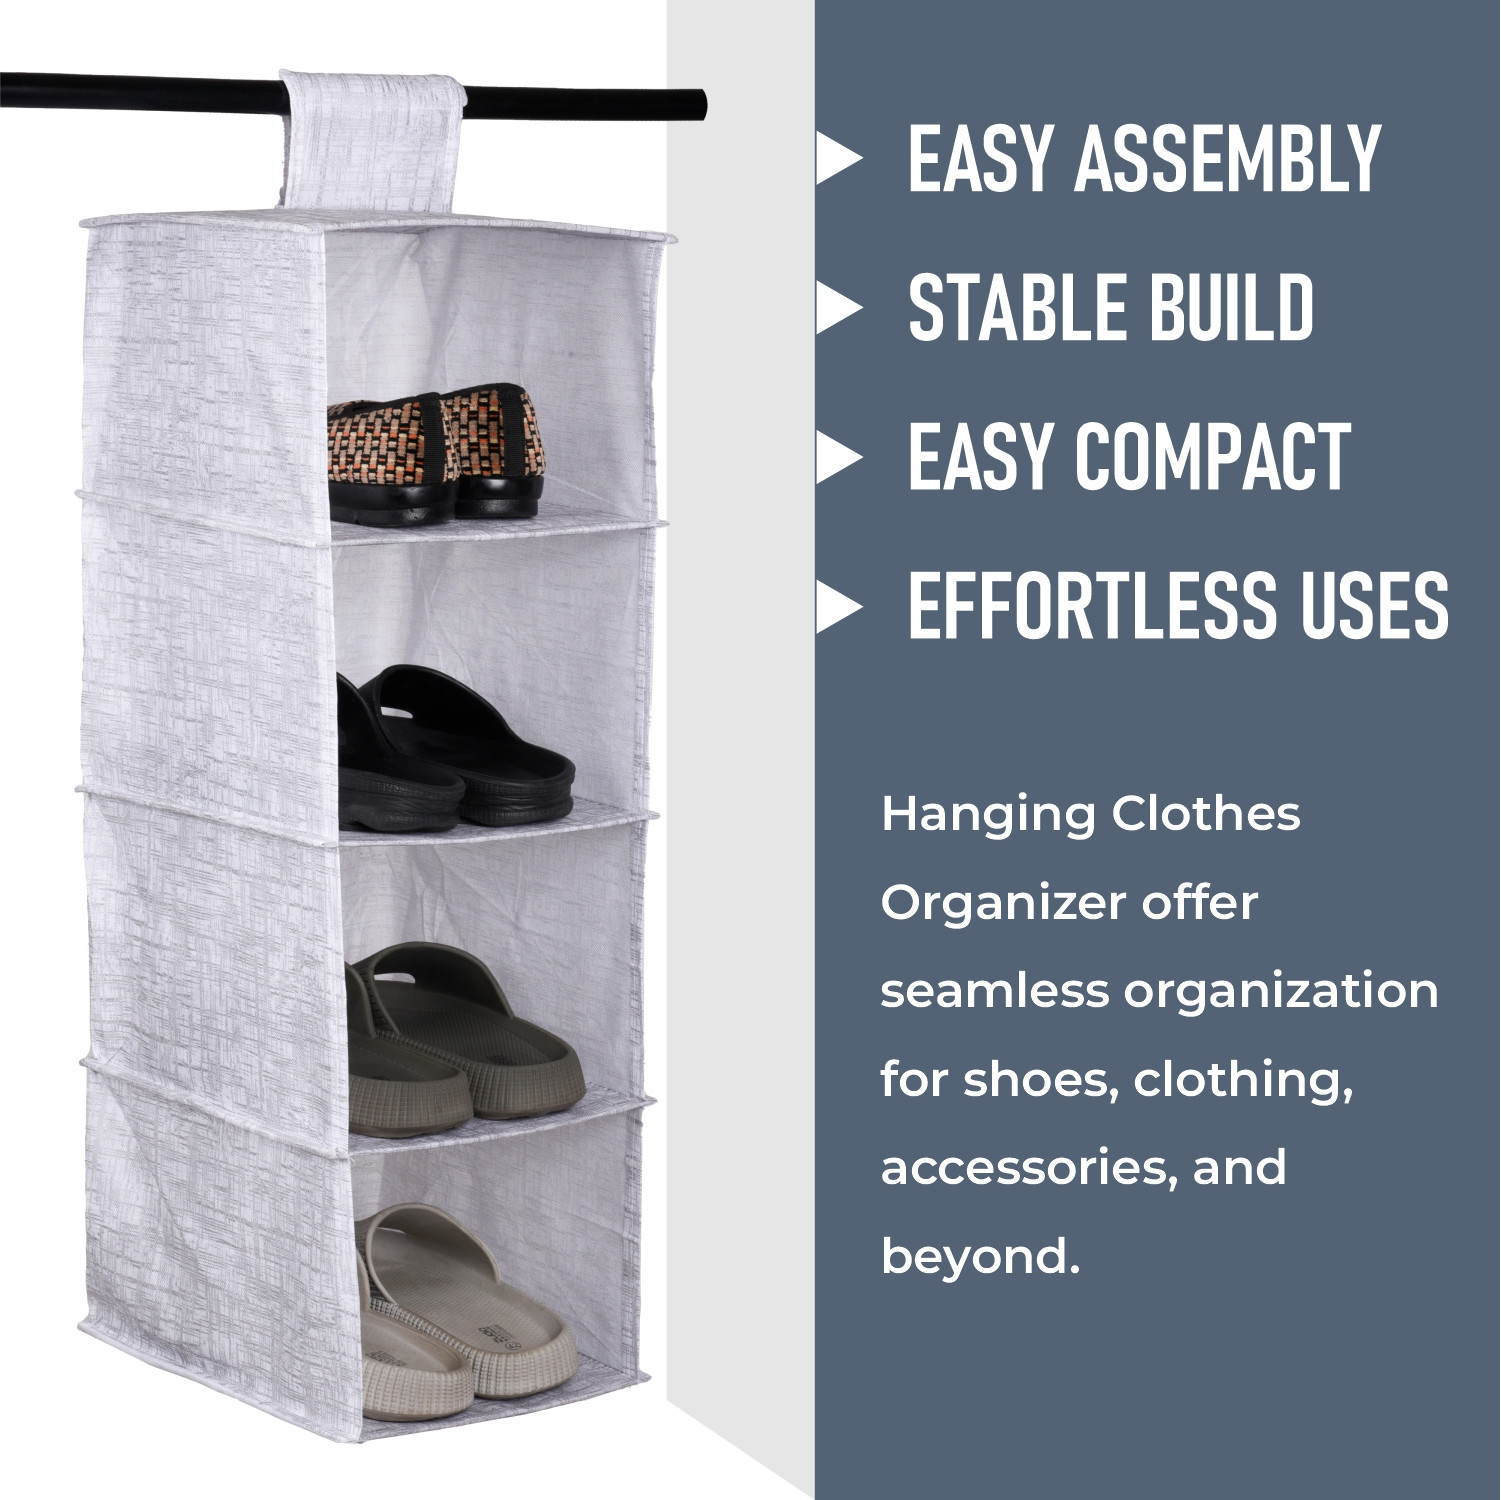 Kuber Industries Shoe Rack | 4 Shelf Foldable Storage Rack | Clothes Hanging Organizer | Shoe Storage Organizer | Closet Organizer with Velcro | Shoe Rack Jute Printed | Gray